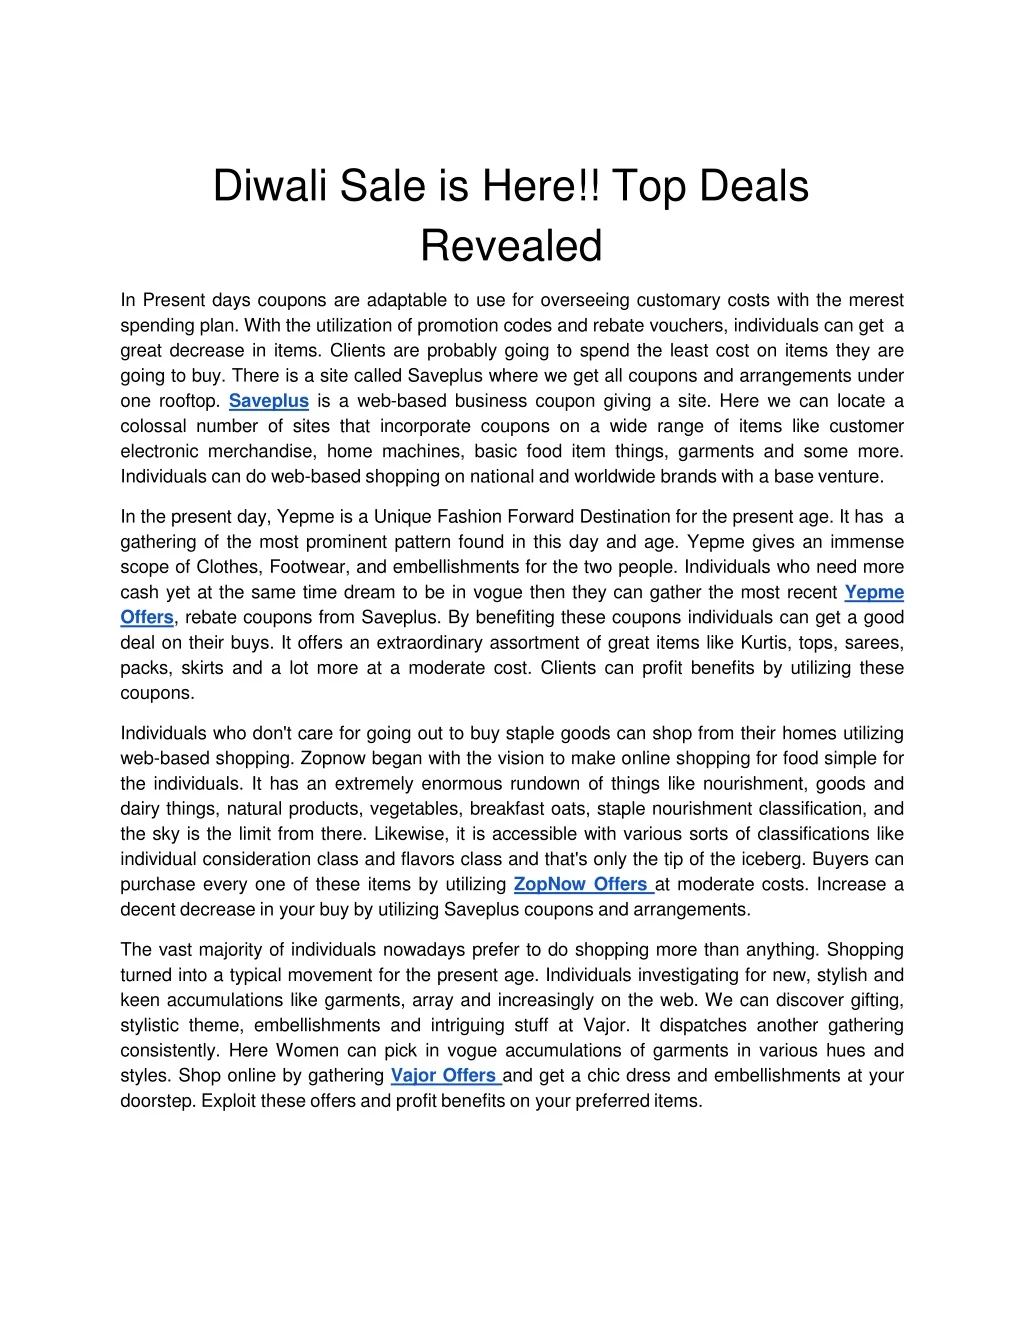 diwali sale is here top deals revealed